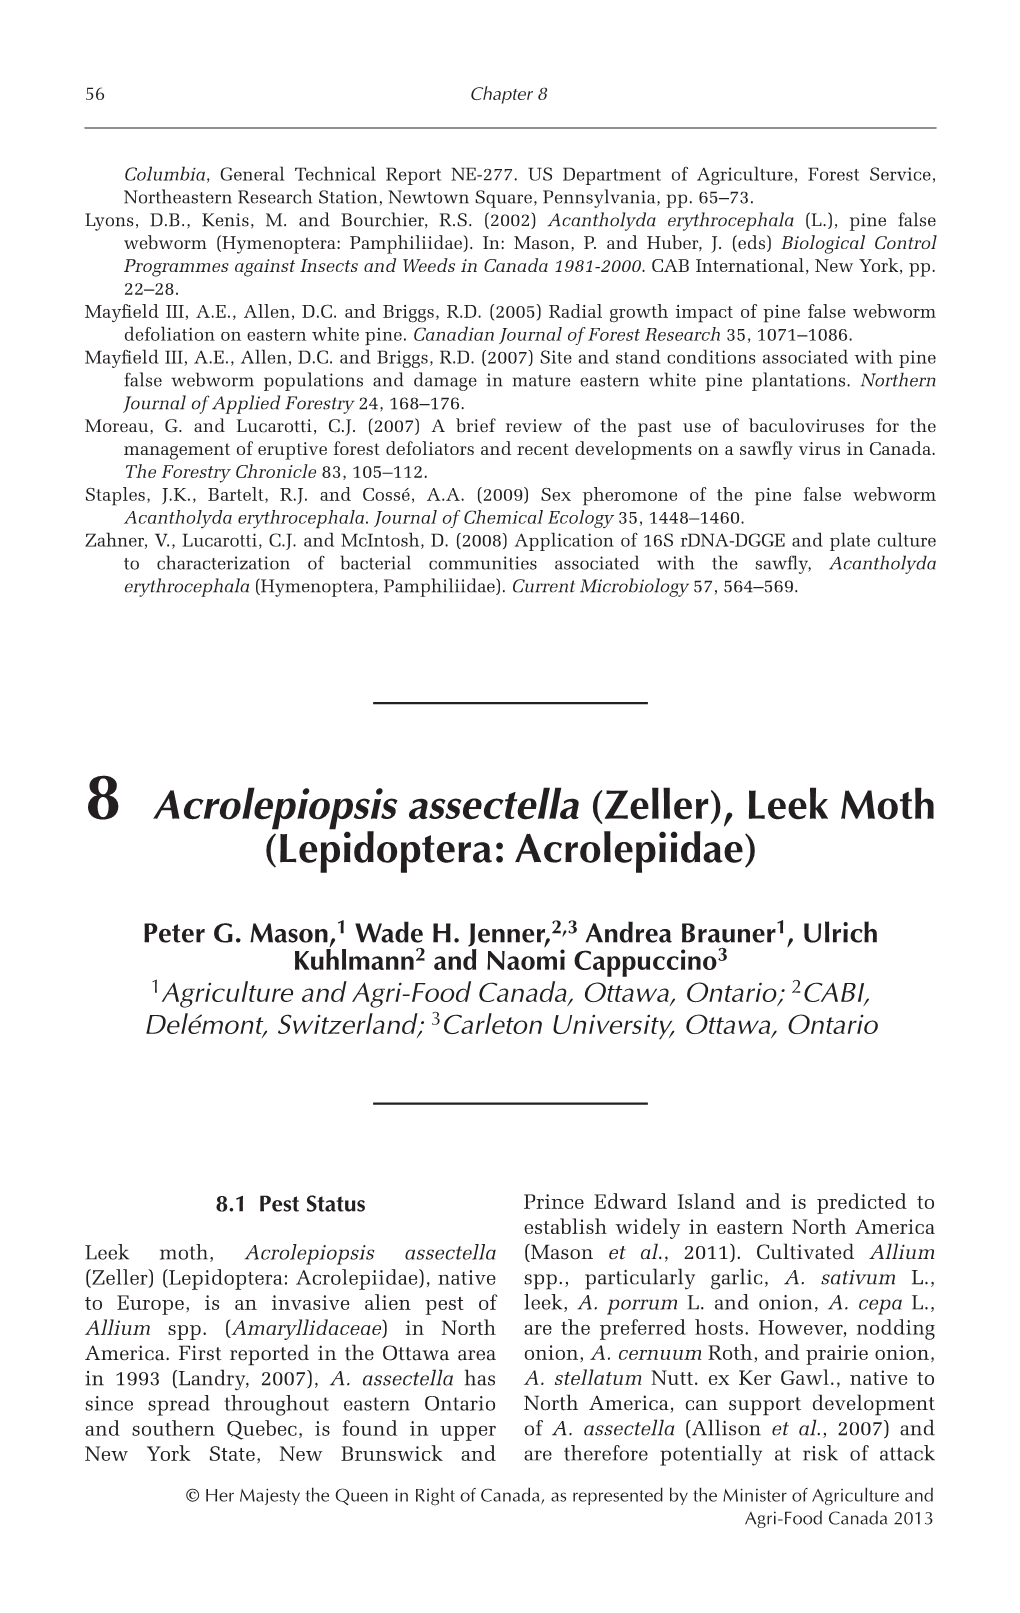 8 Acrolepiopsis Assectella (Zeller), Leek Moth (Lepidoptera: Acrolepiidae)